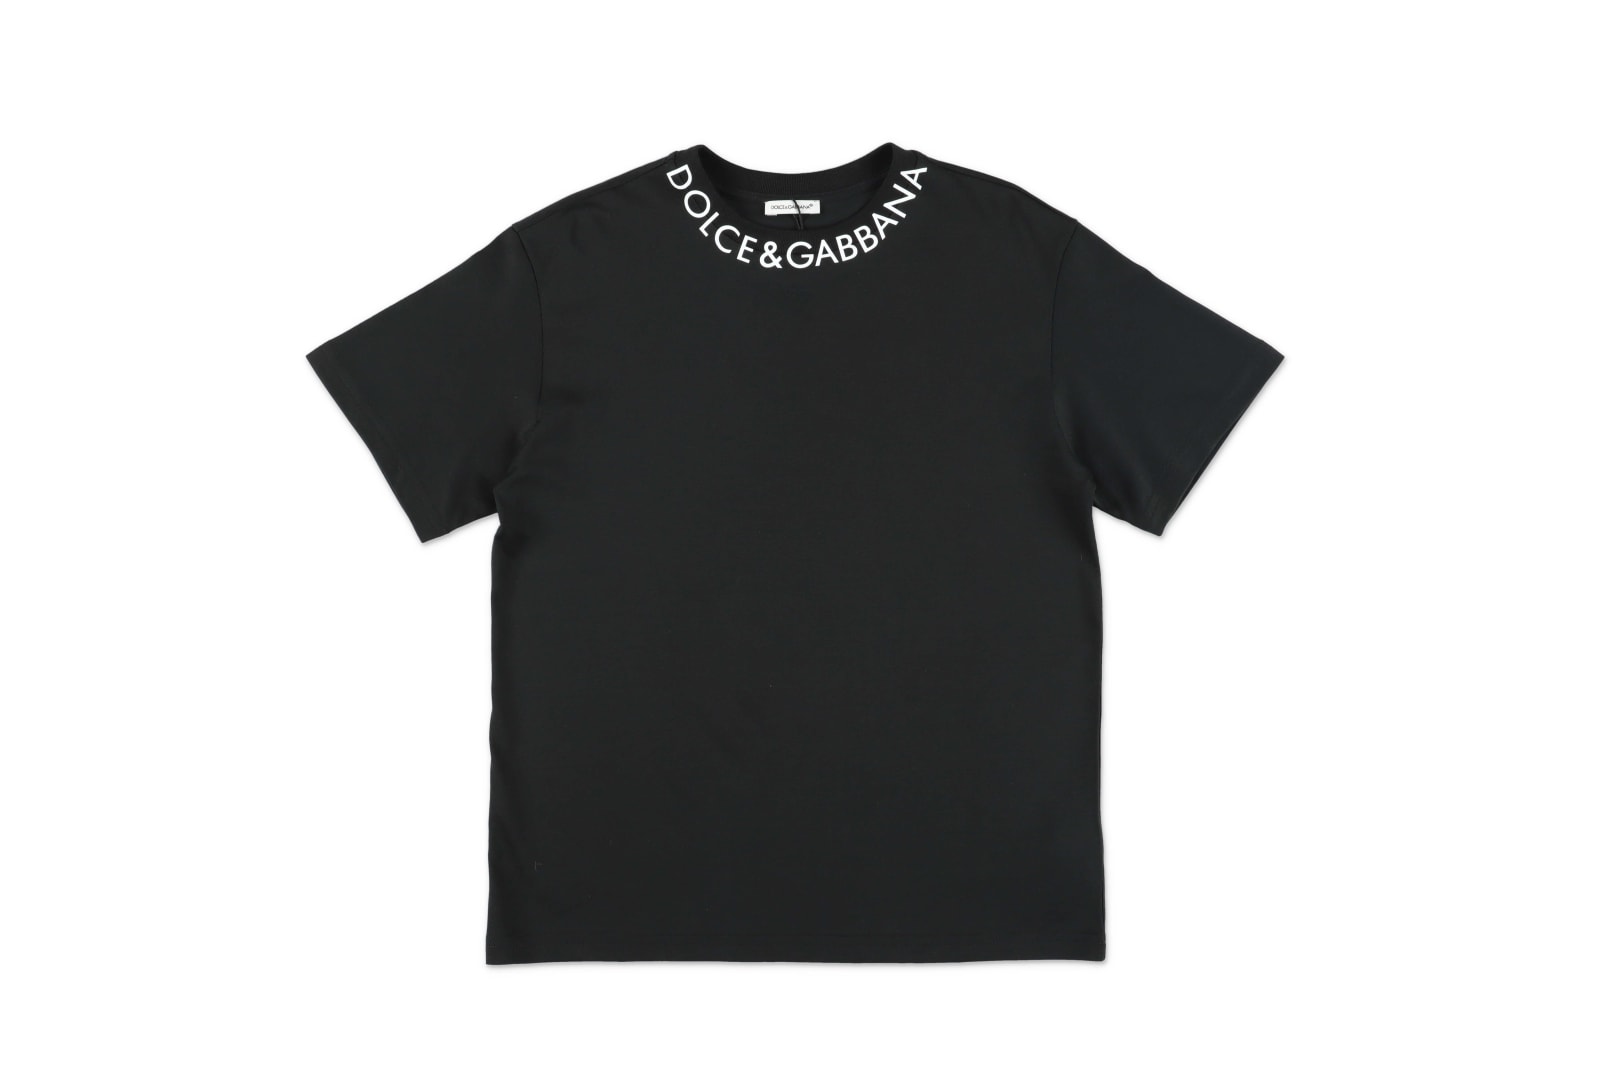 Dolce & Gabbana T-shirt Nera In Jersey Di Cotone Bambino